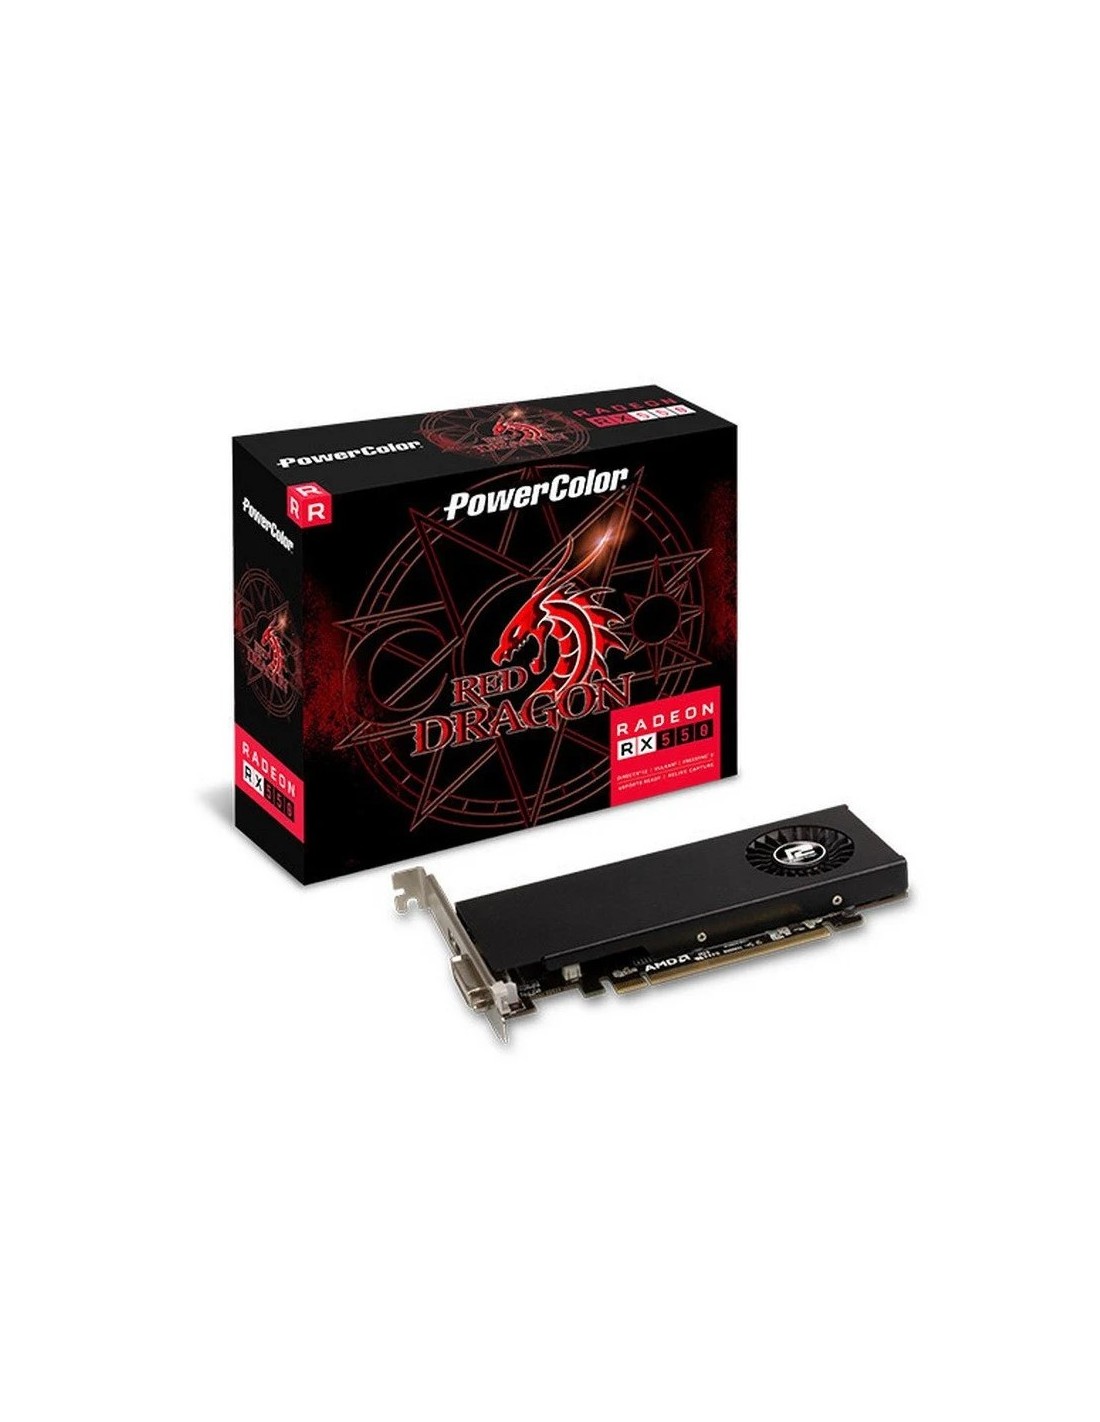 Triatleta cemento espada PowerColor Red Dragon Radeon RX 550 4GB GDDR5 LP - IbericaVIP